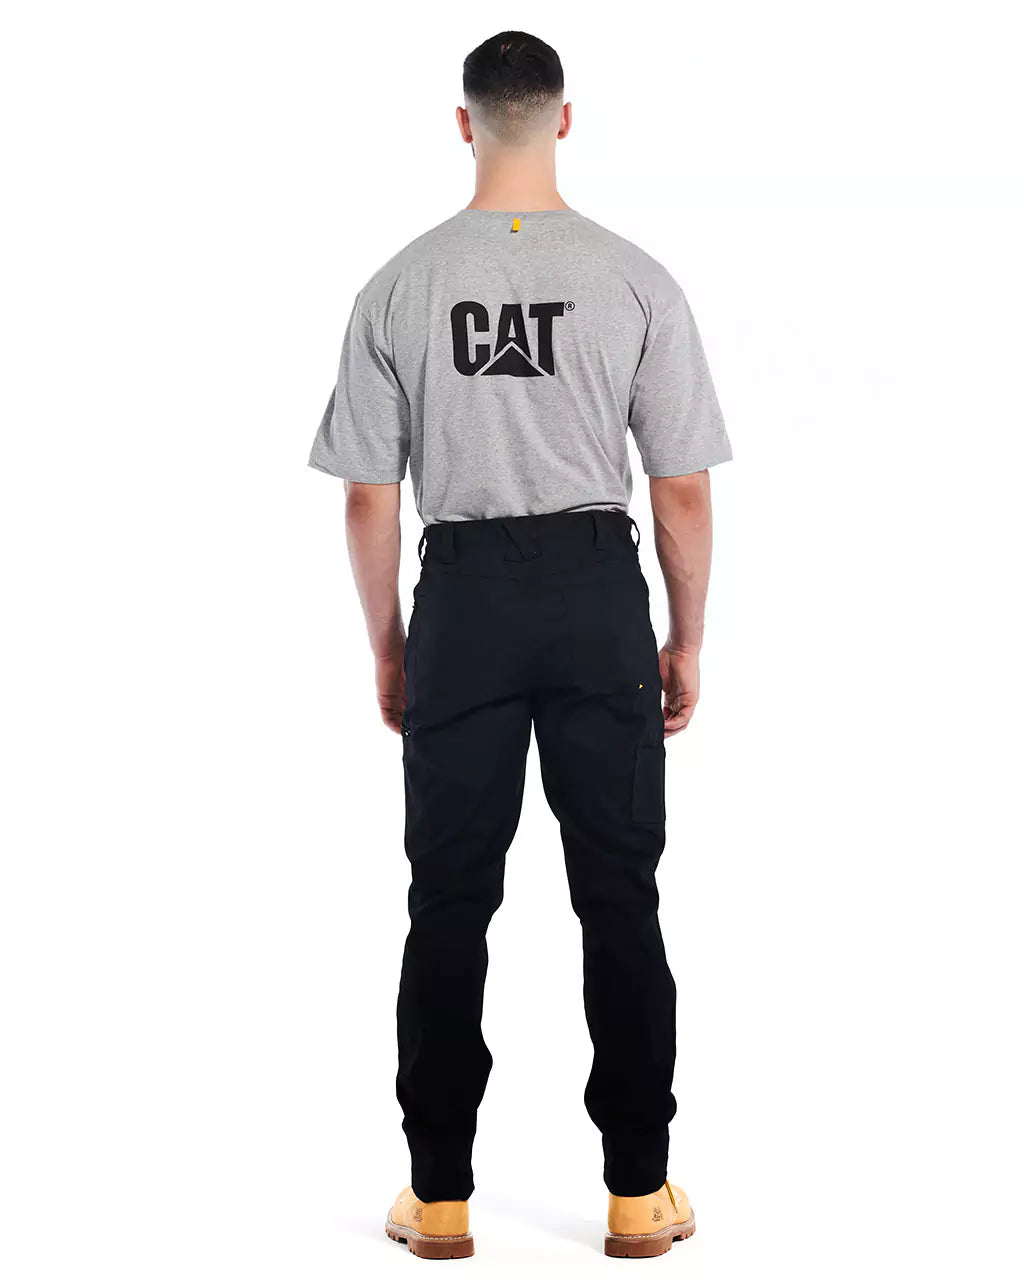 CAT Caterpillar Fleece Lined Black Canvas Work Pants Men's Size 34 x 32